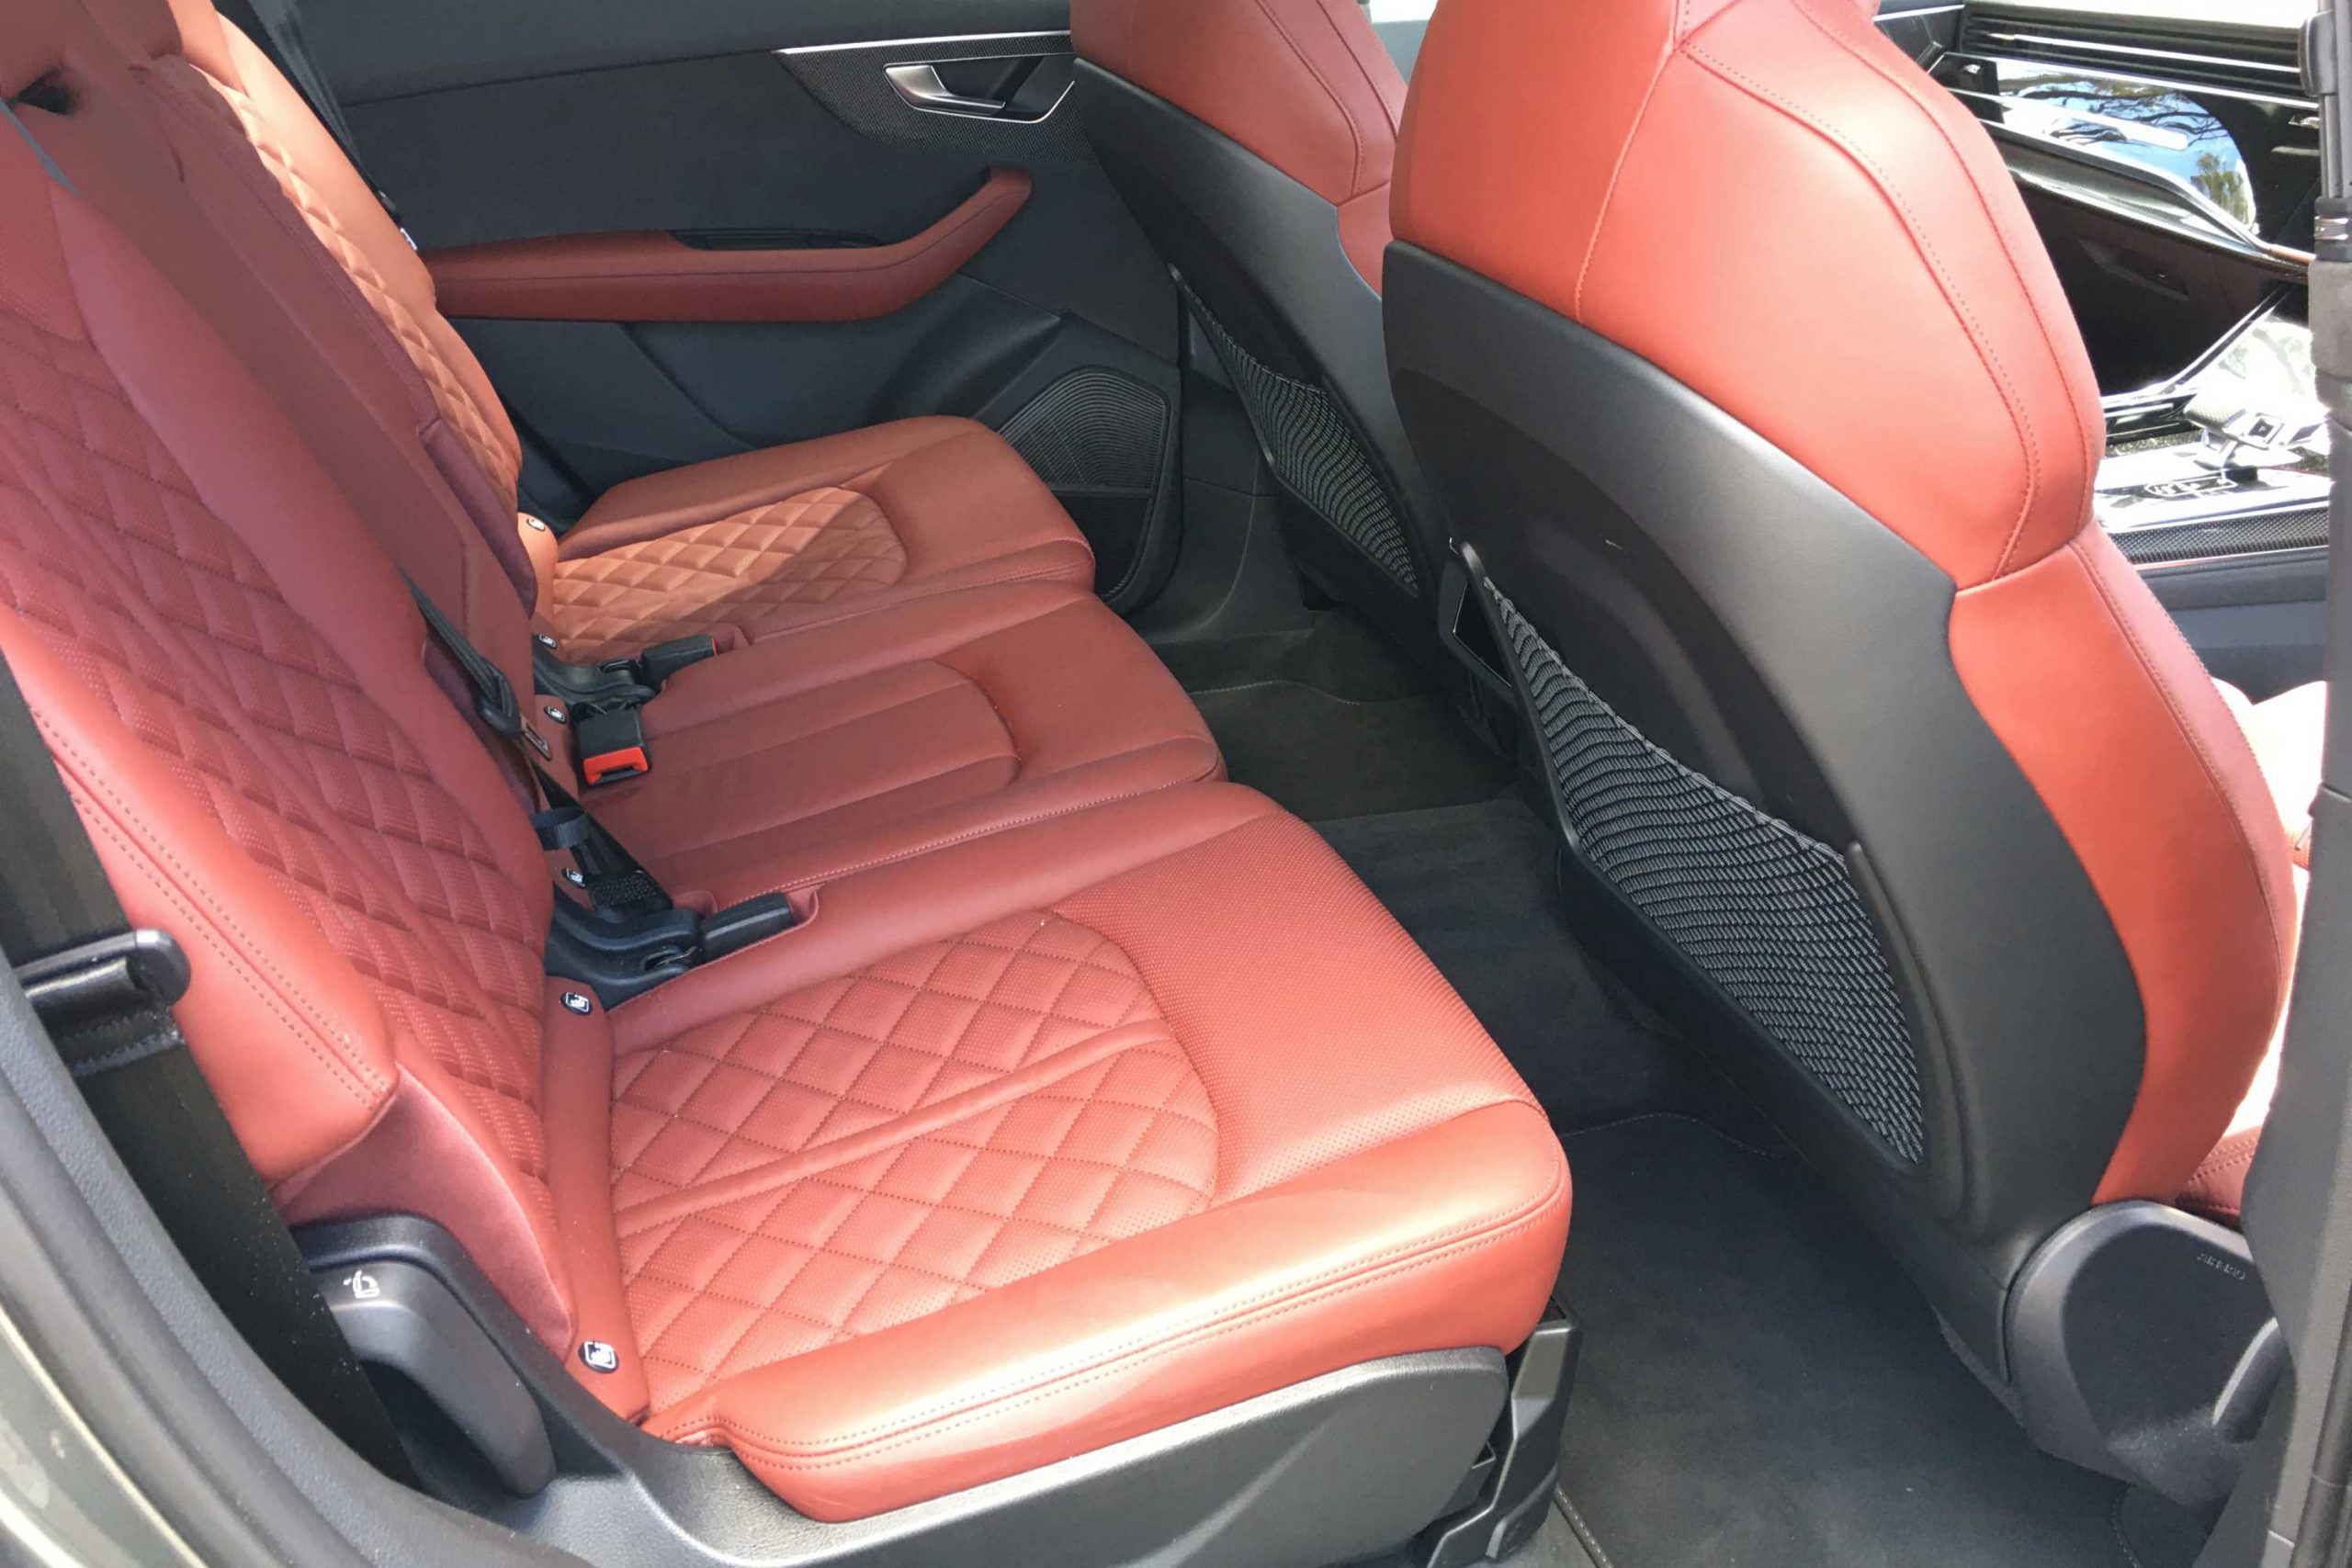 2021 Audi SQ7 interior rear seats